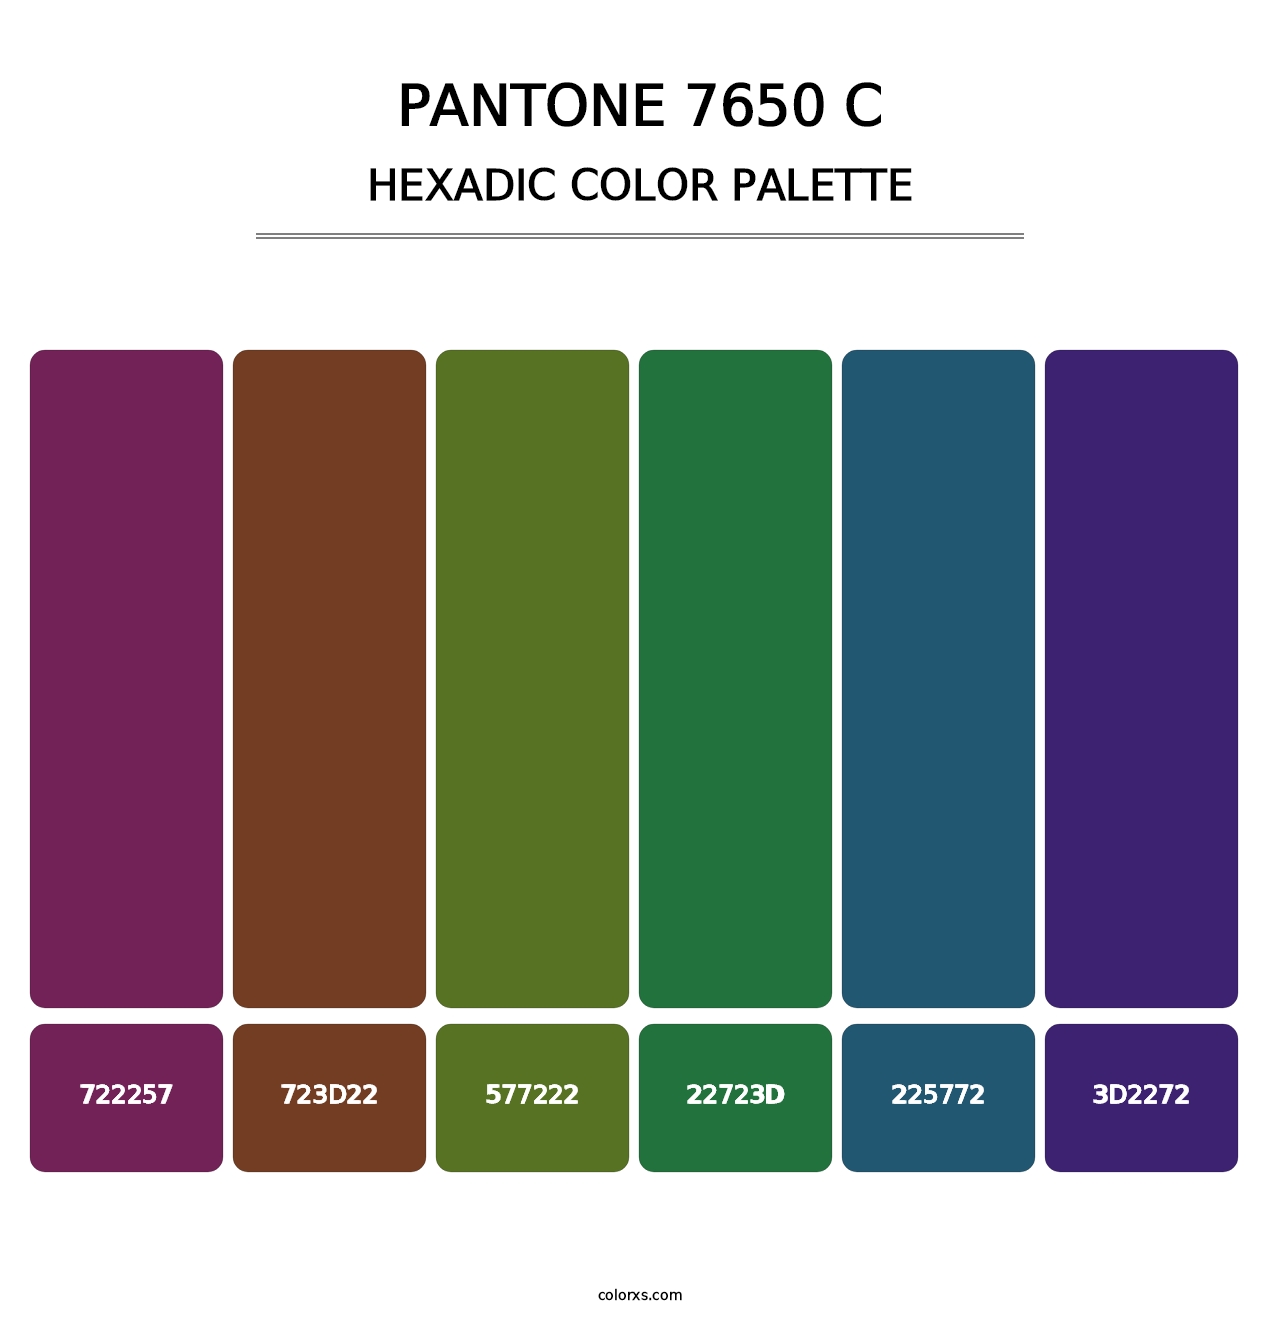 PANTONE 7650 C - Hexadic Color Palette